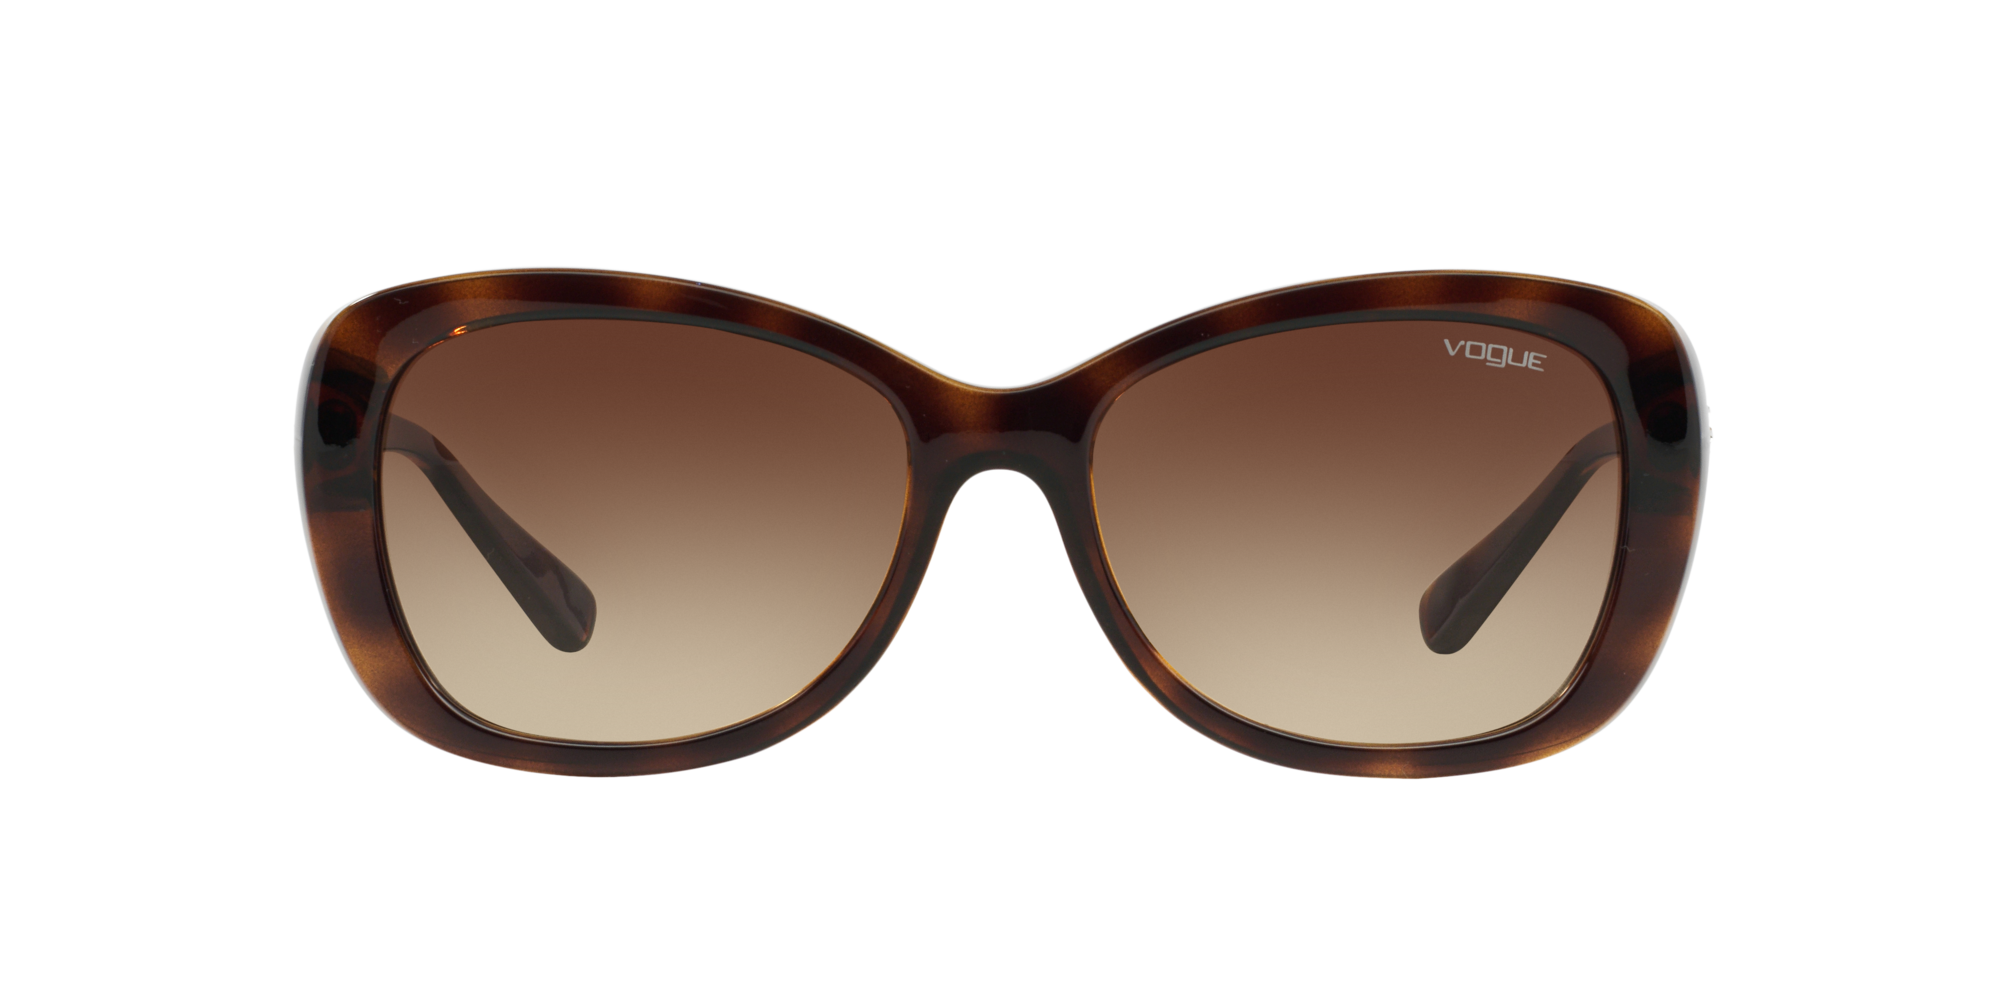 Vogue Sunglasses Price Range Store, 59% OFF | lagence.tv